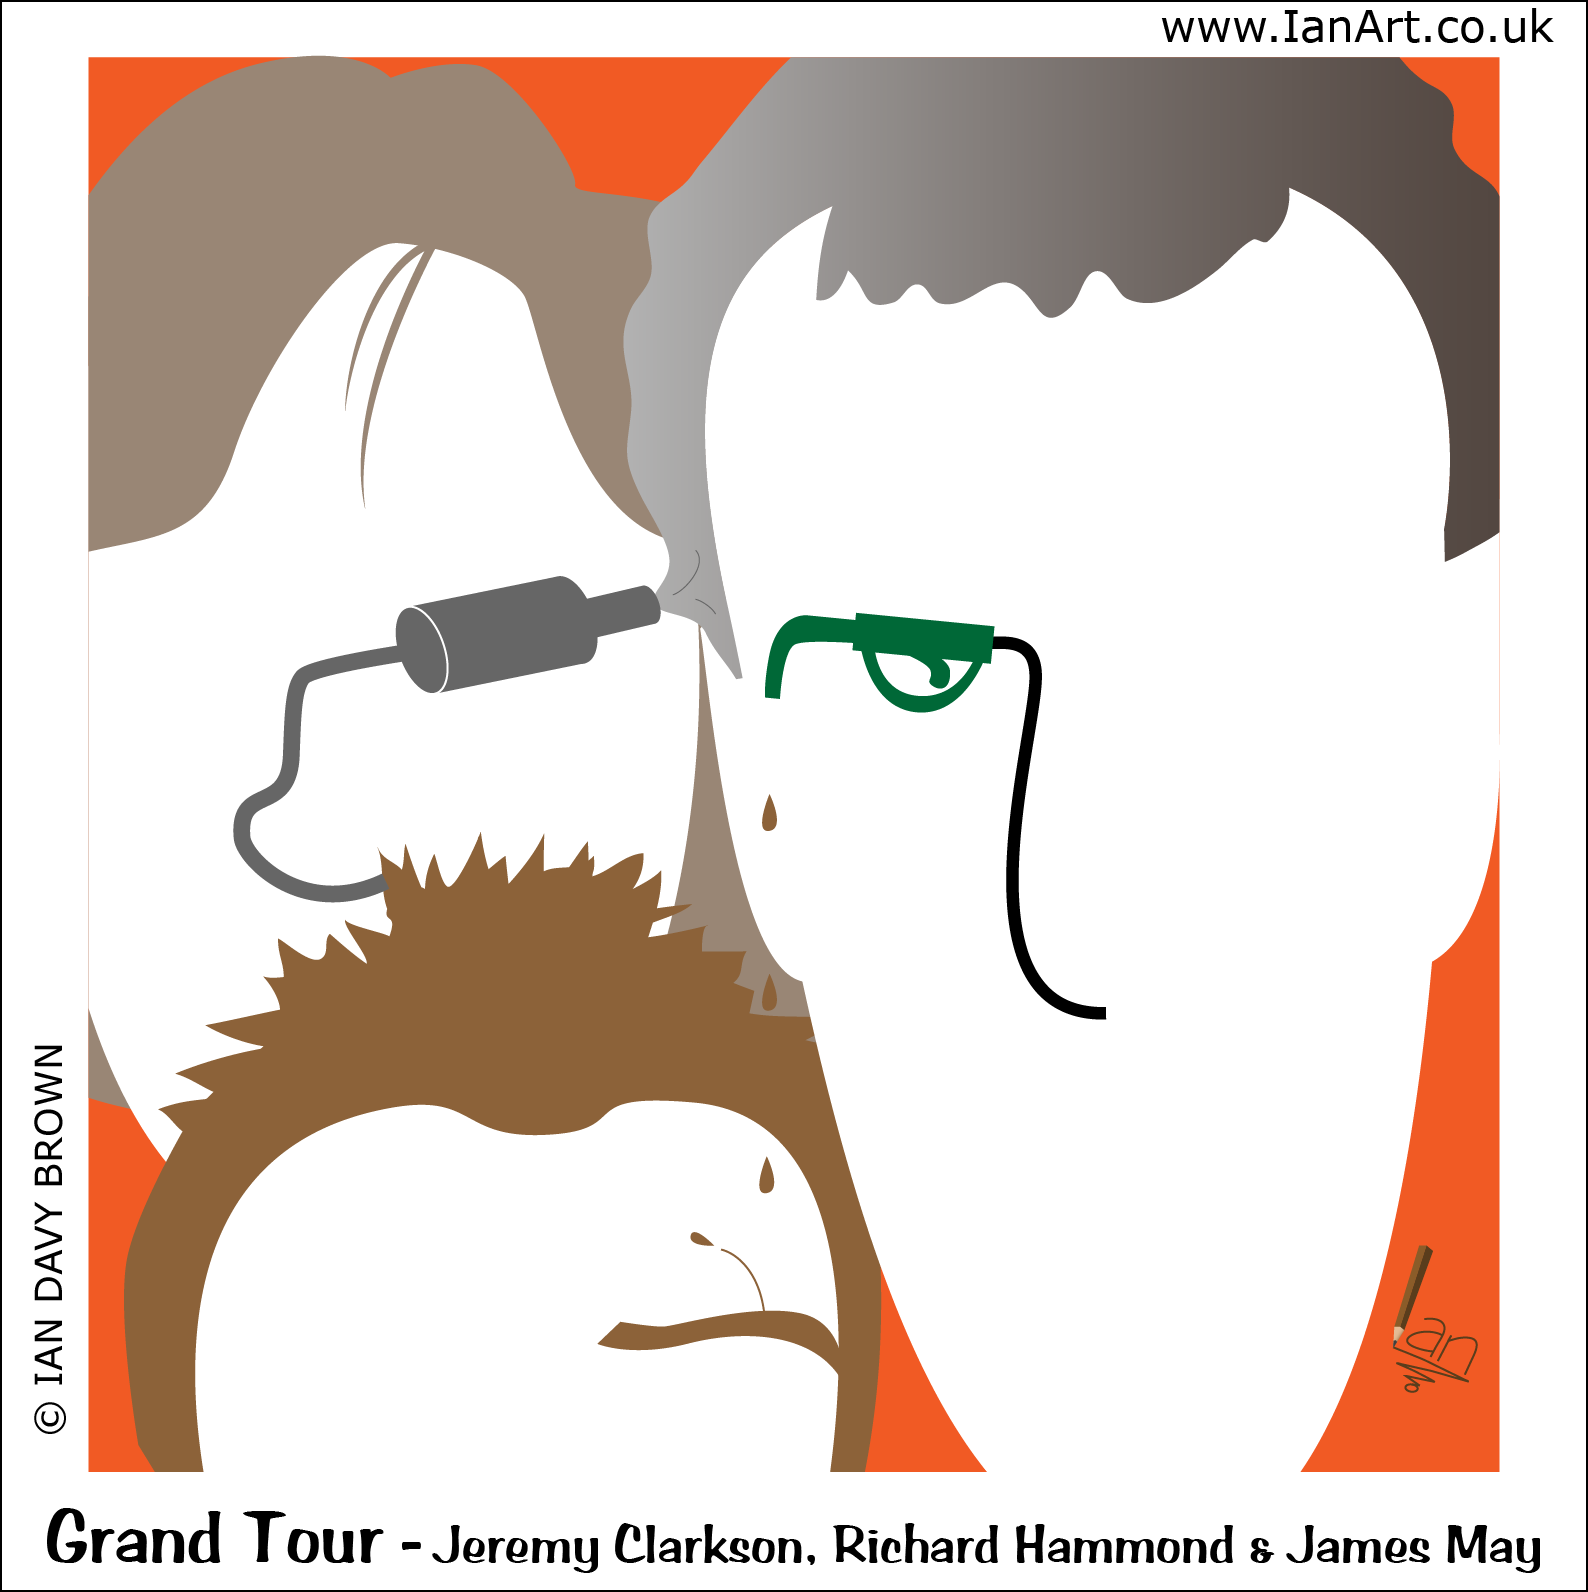 Grand-Tour-Jeremy- Clarkson-Richard-Hammond-James-May-TV-Caricature-Symbolic-cartoon-created-Ian-Davy-Brown-IanArt-IDB